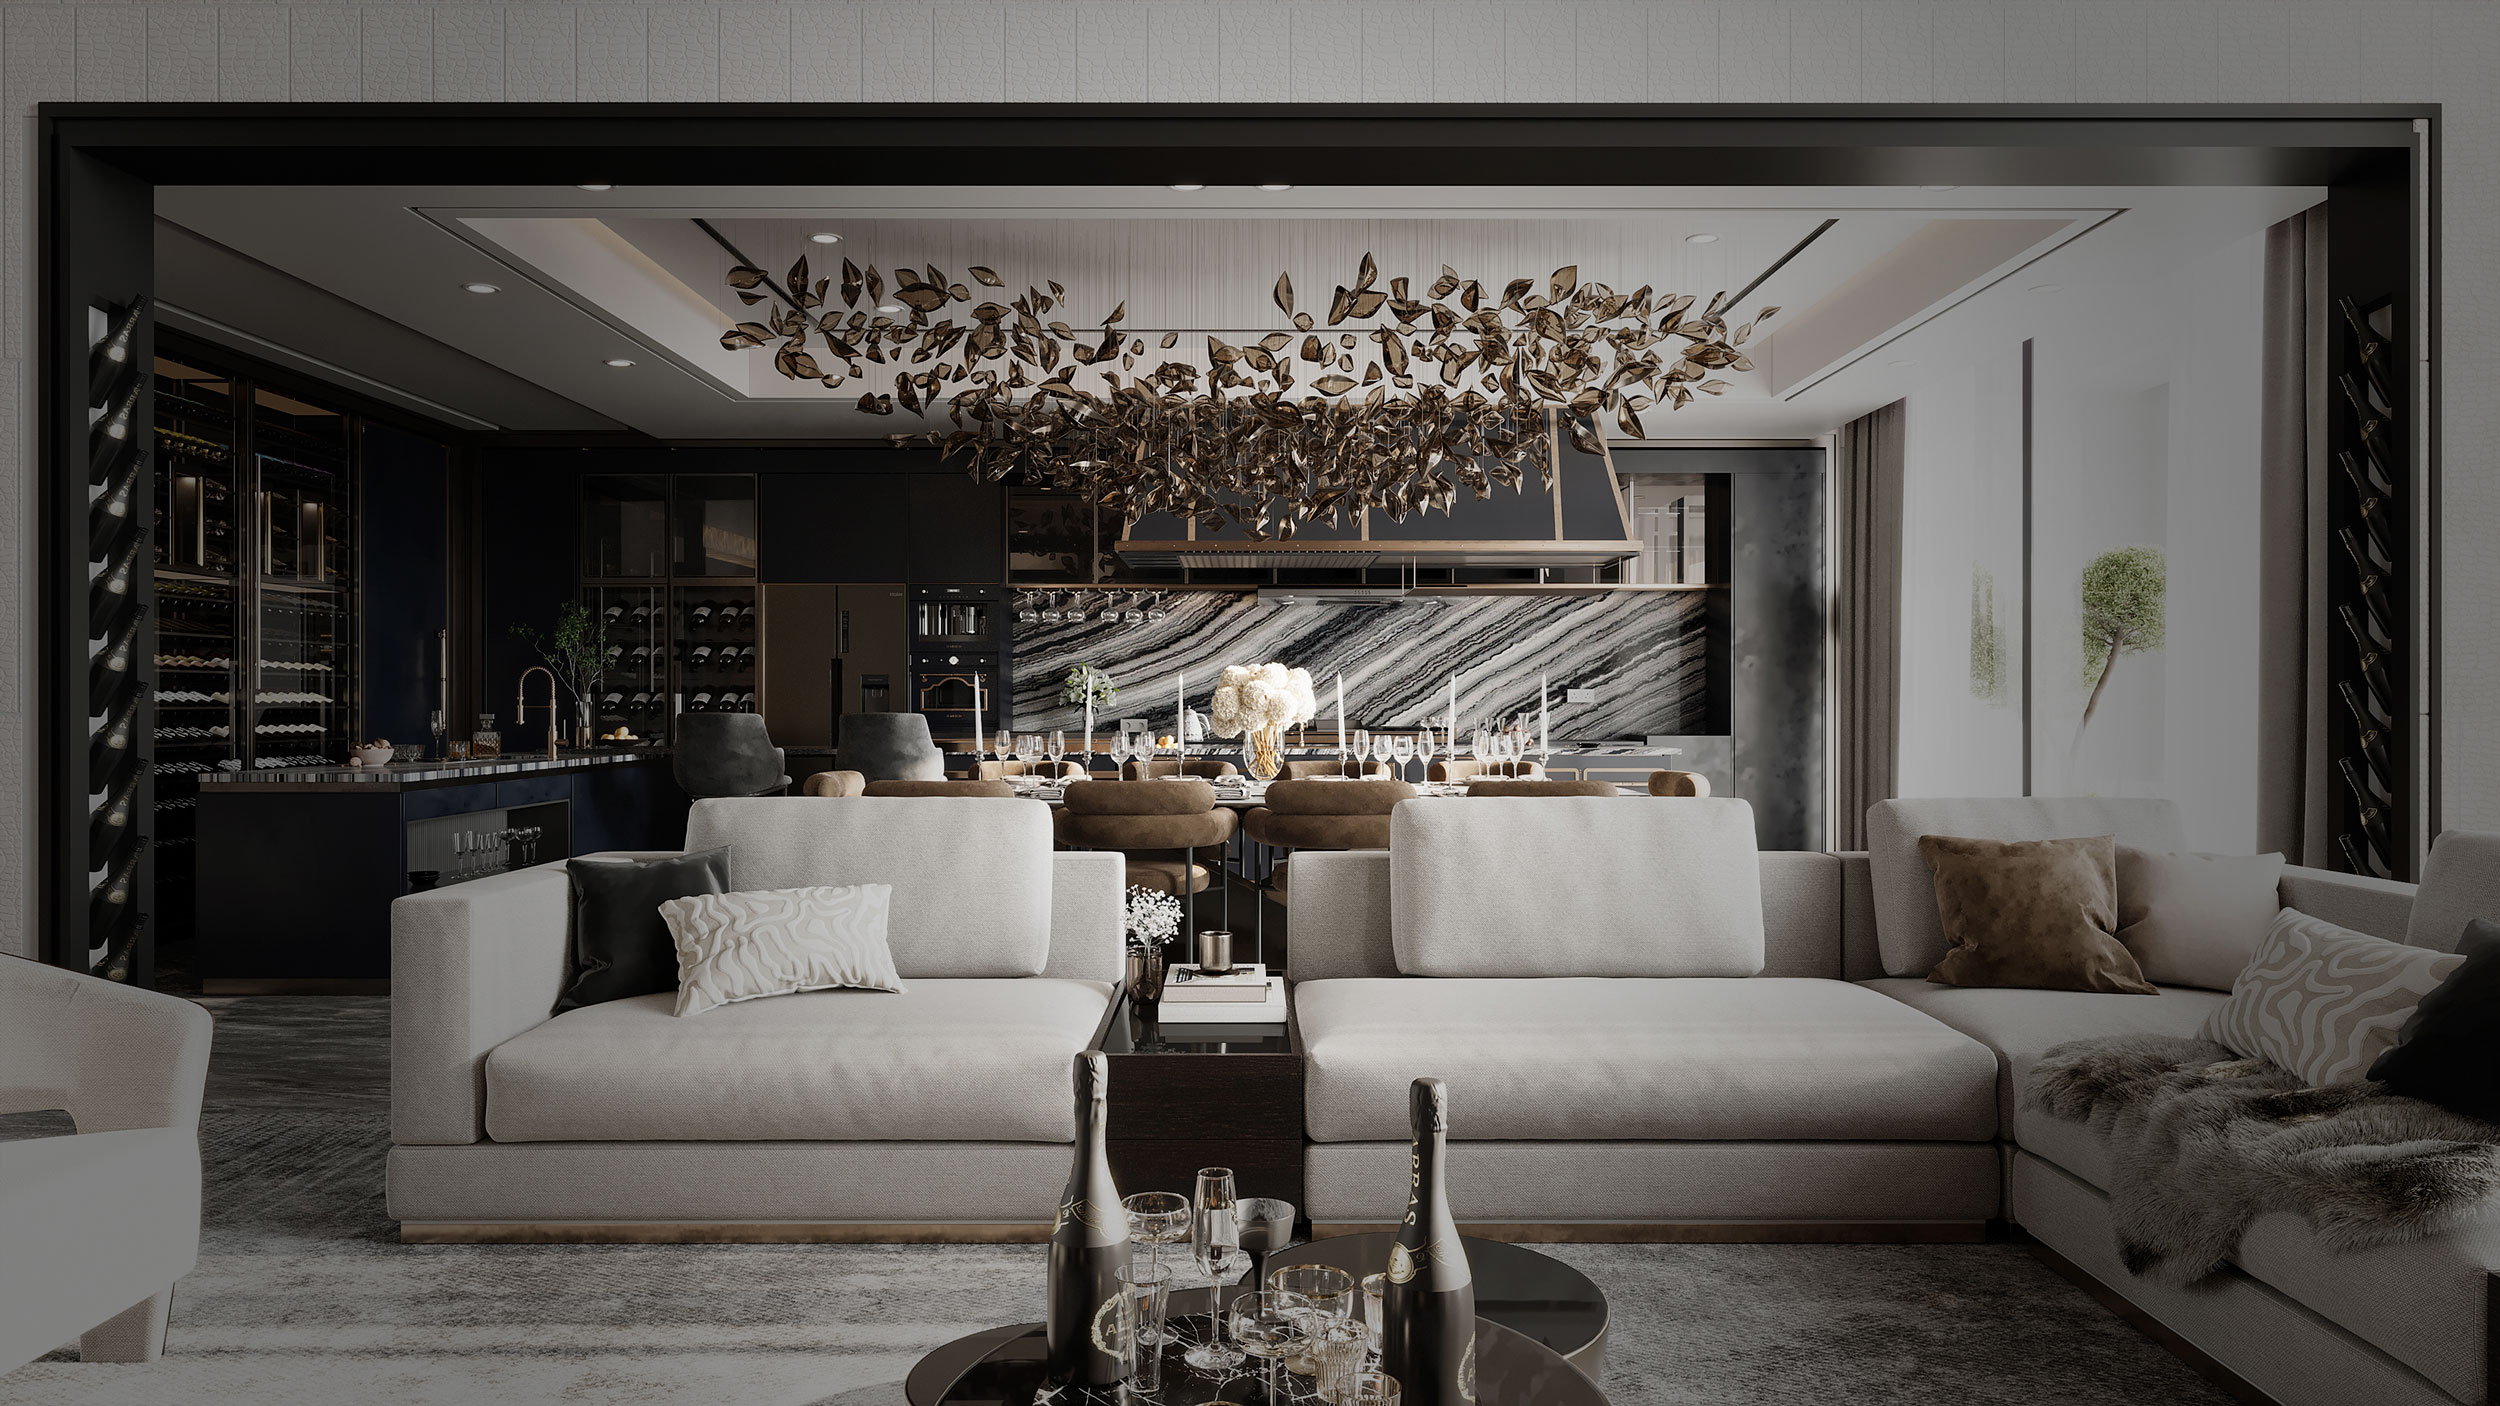 Exquisite decor and design | Renfrew ON